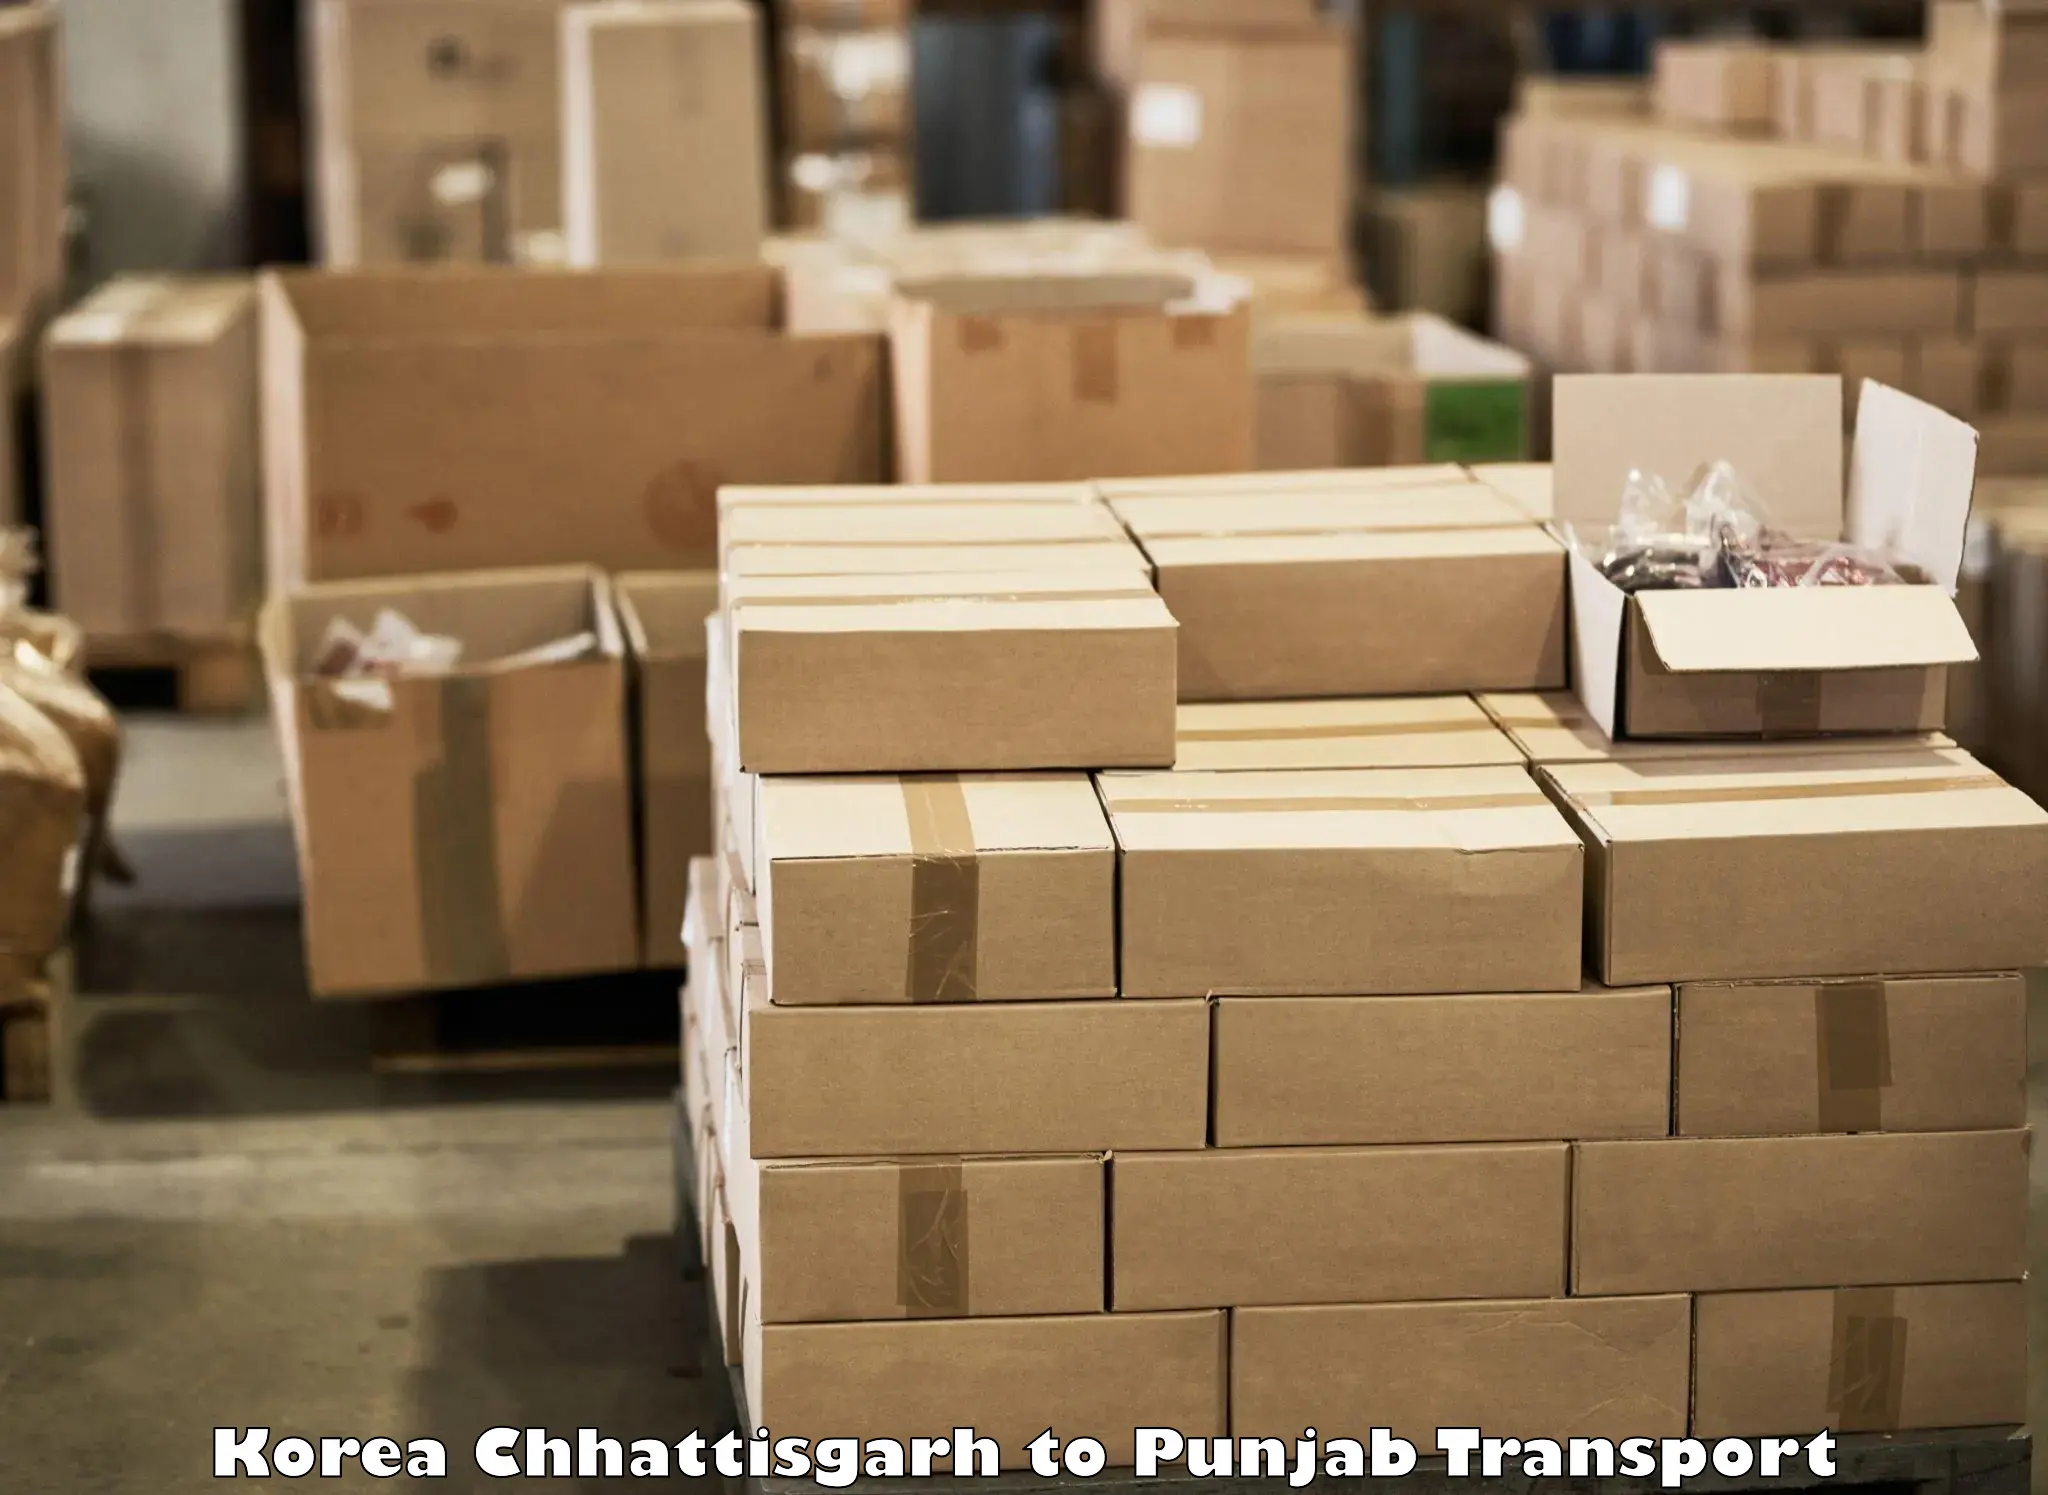 Daily parcel service transport Korea Chhattisgarh to Malerkotla